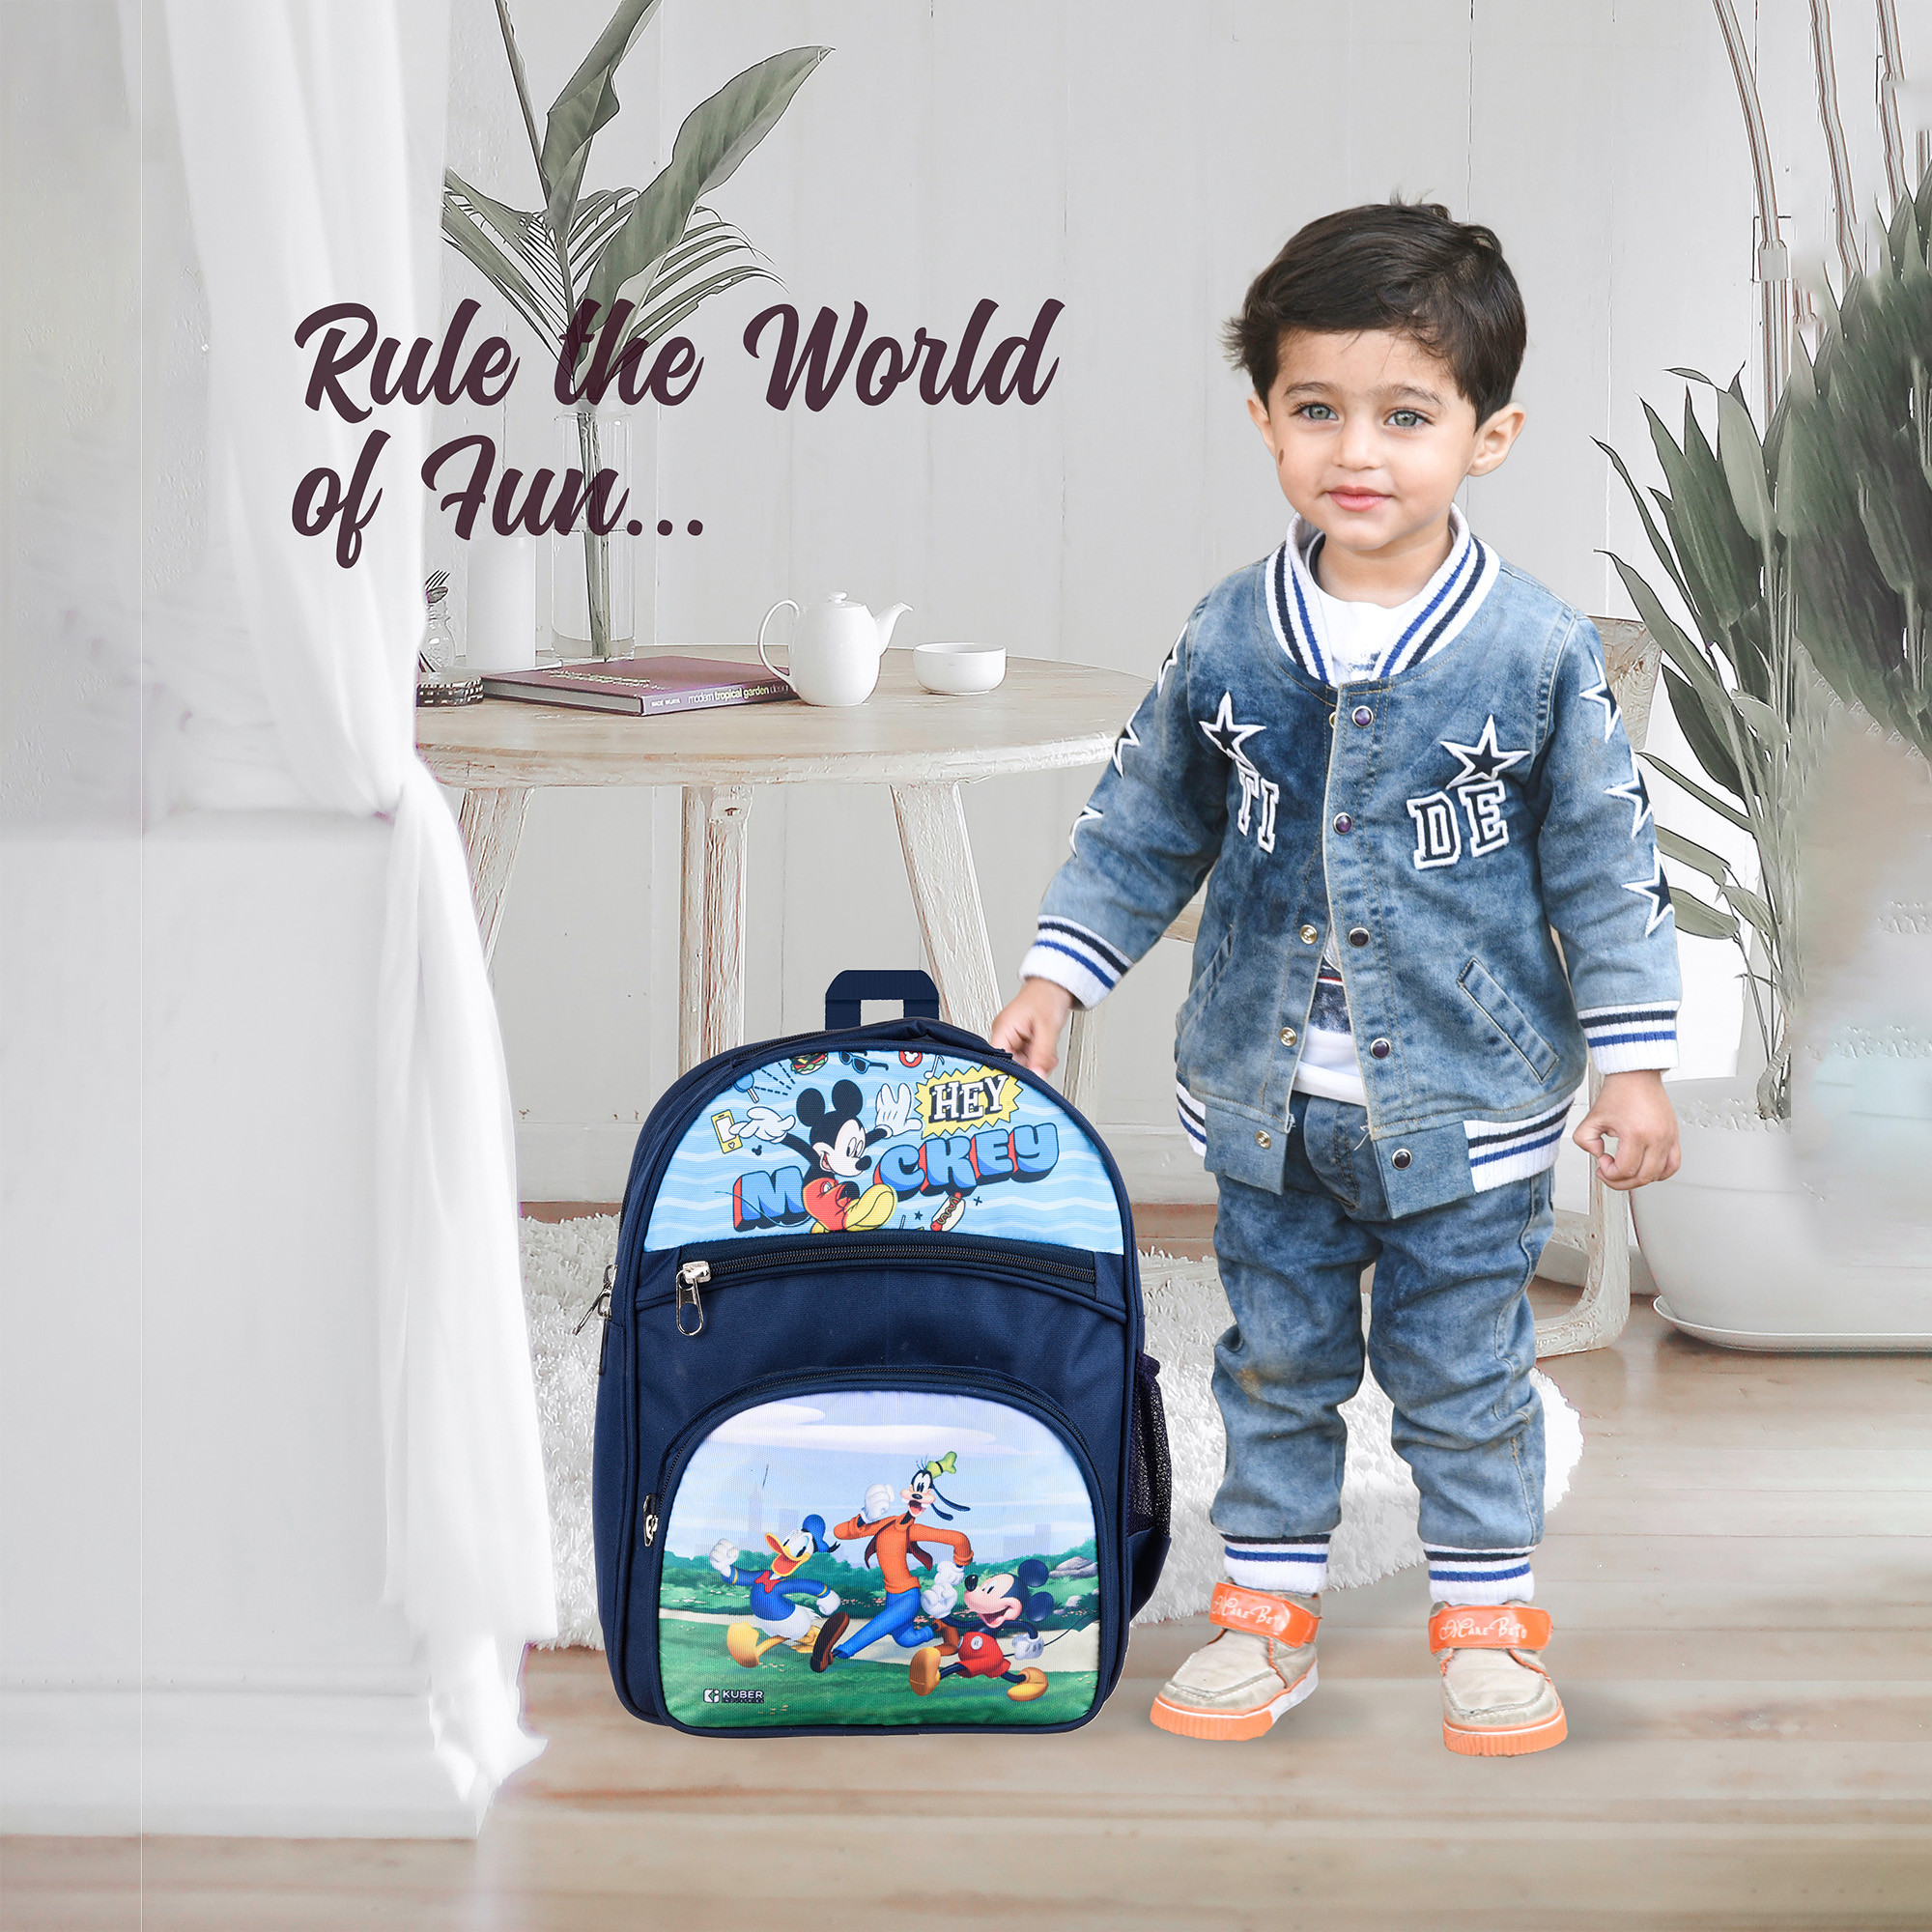 Kuber Industries Disney Hey Mickey School Bags | Kids School Bags | Student Bookbag | Travel Backpack | School Bag for Girls & Boys | School Bag with 4 Compartments | Navy Blue